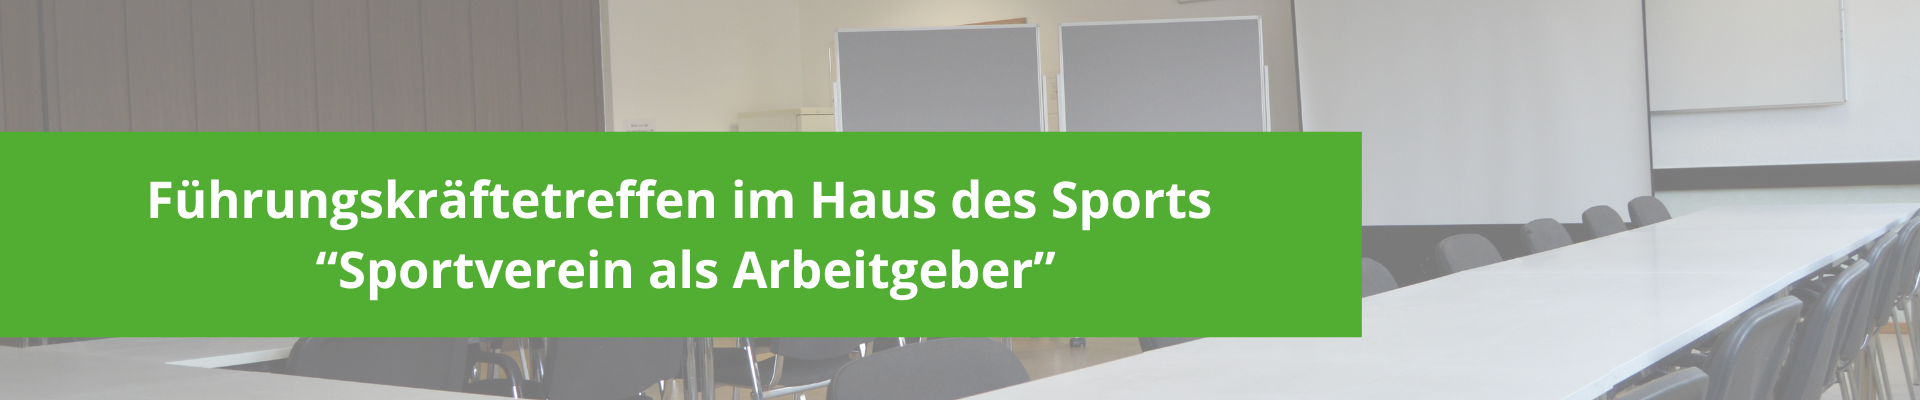 Mülheimer Sportbund e.V.